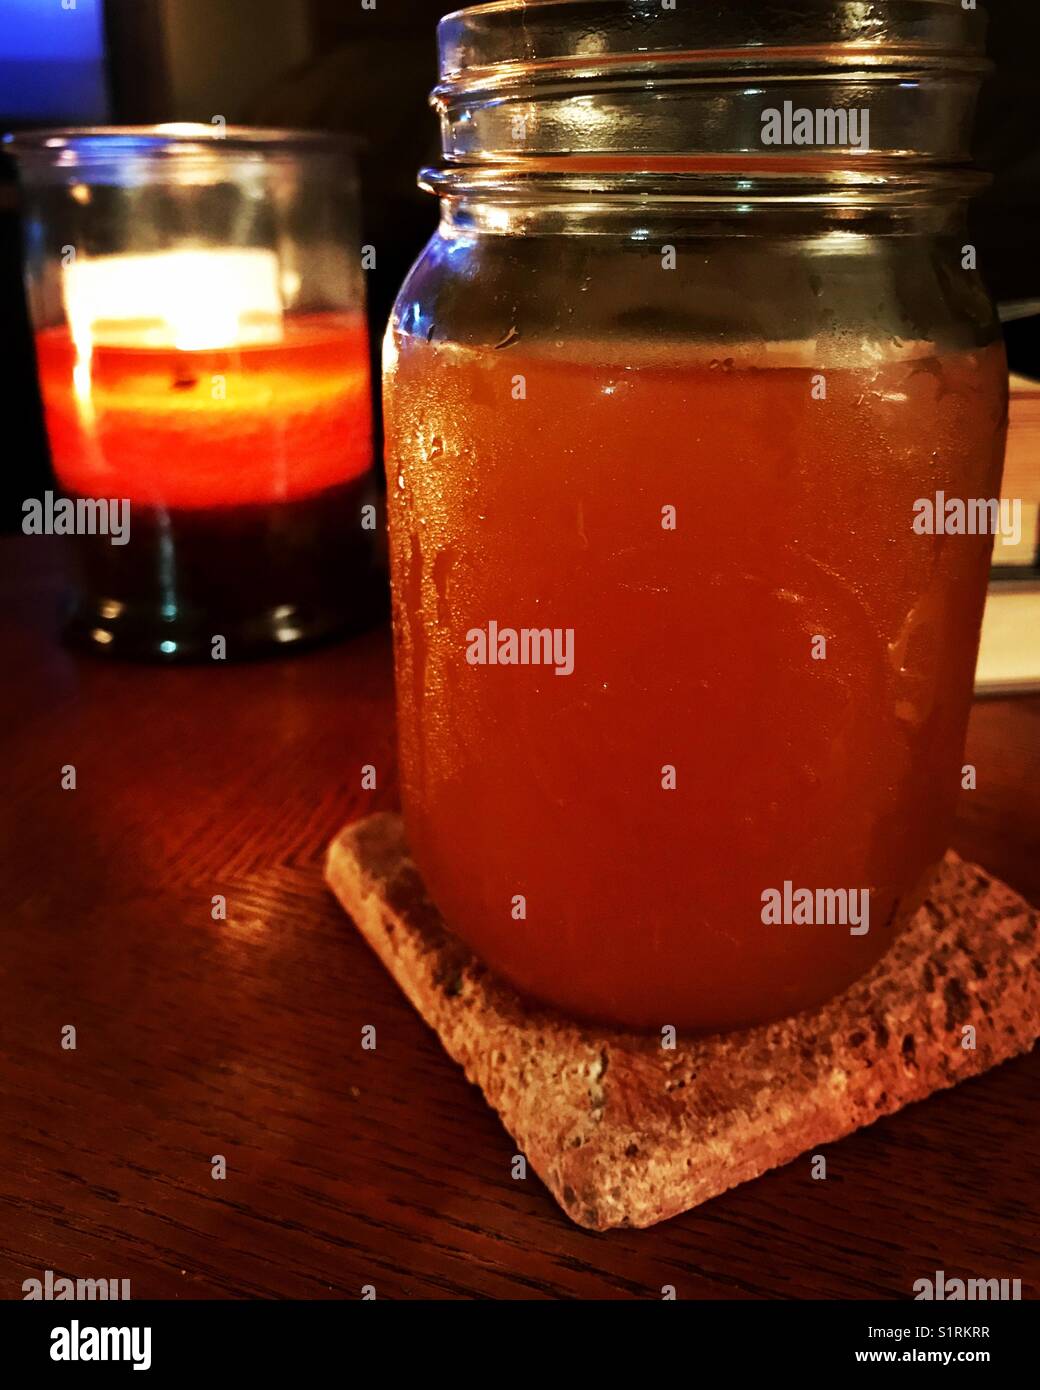 Candle burning behind a mason jar full of apple cider. Stock Photo